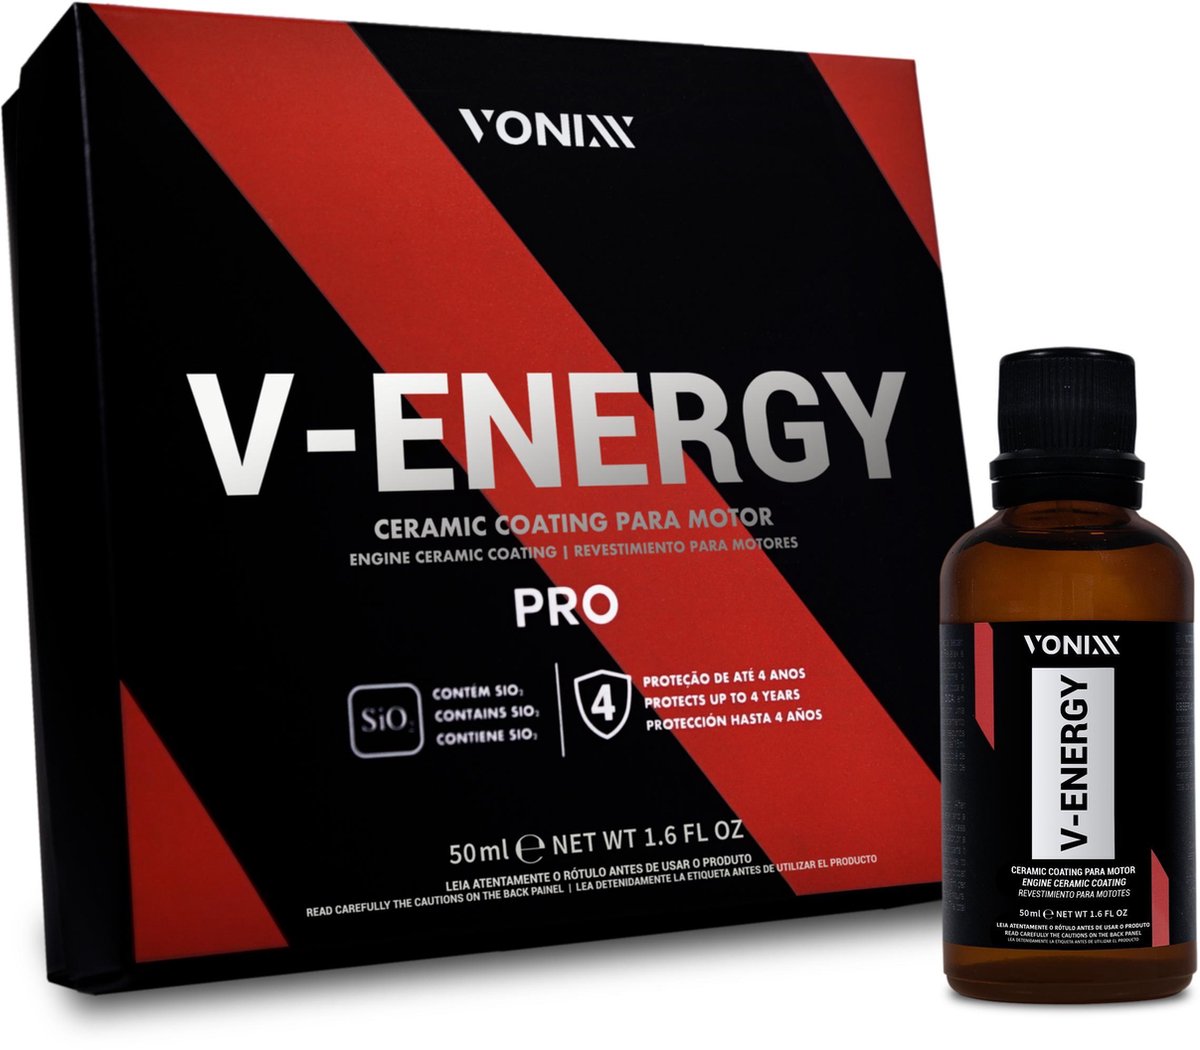 Vonixx Ceramic Coating V-Energy Engine